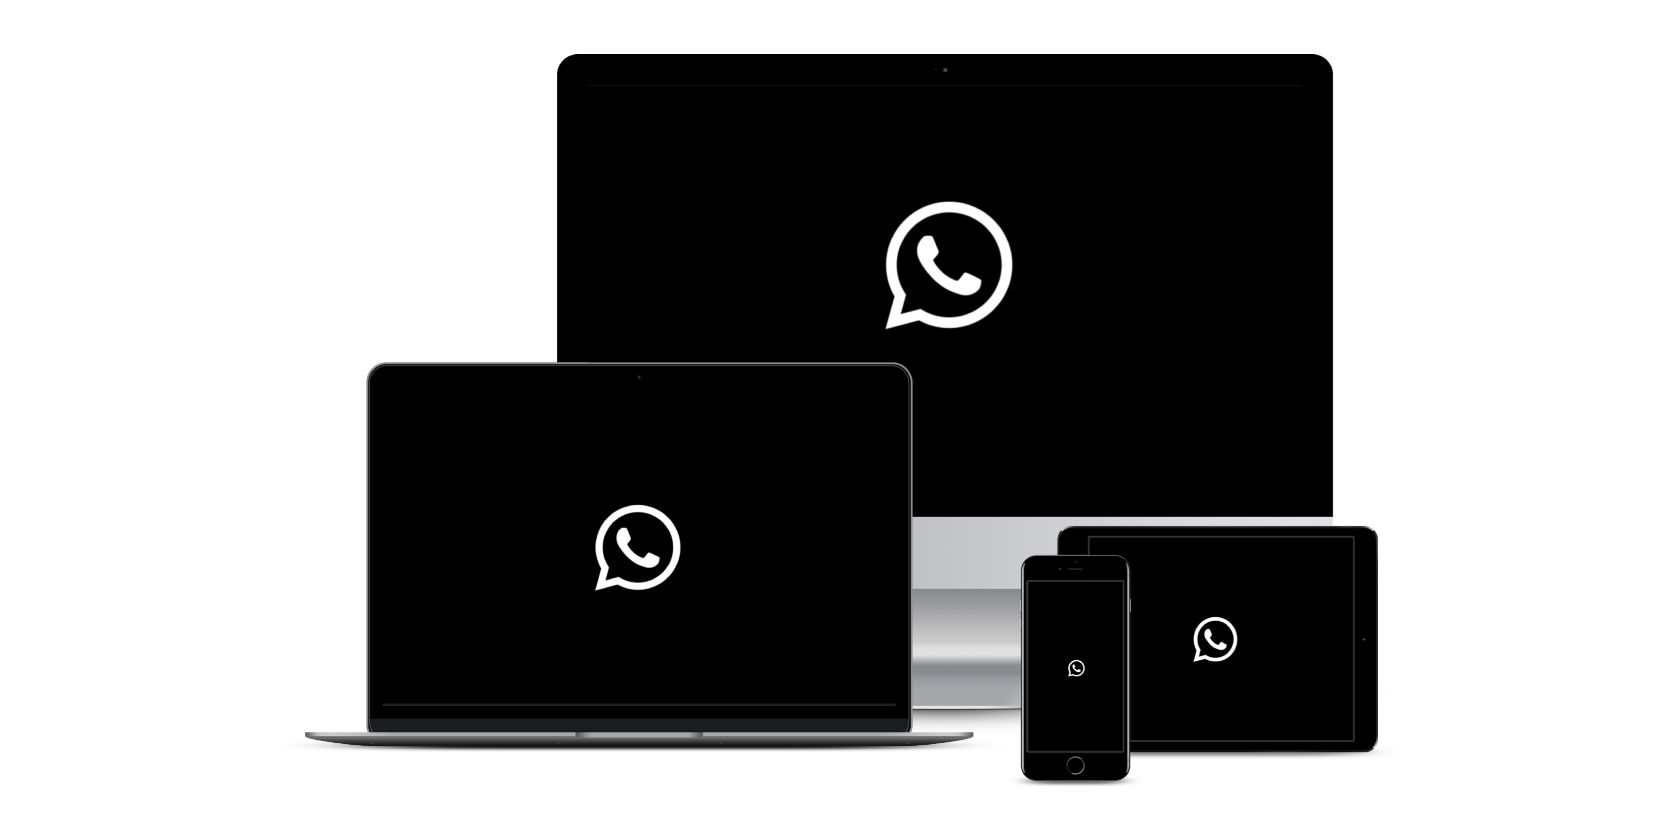 iMac, MacBook, iPad e iPhone com logotipo do WhatsApp na tela